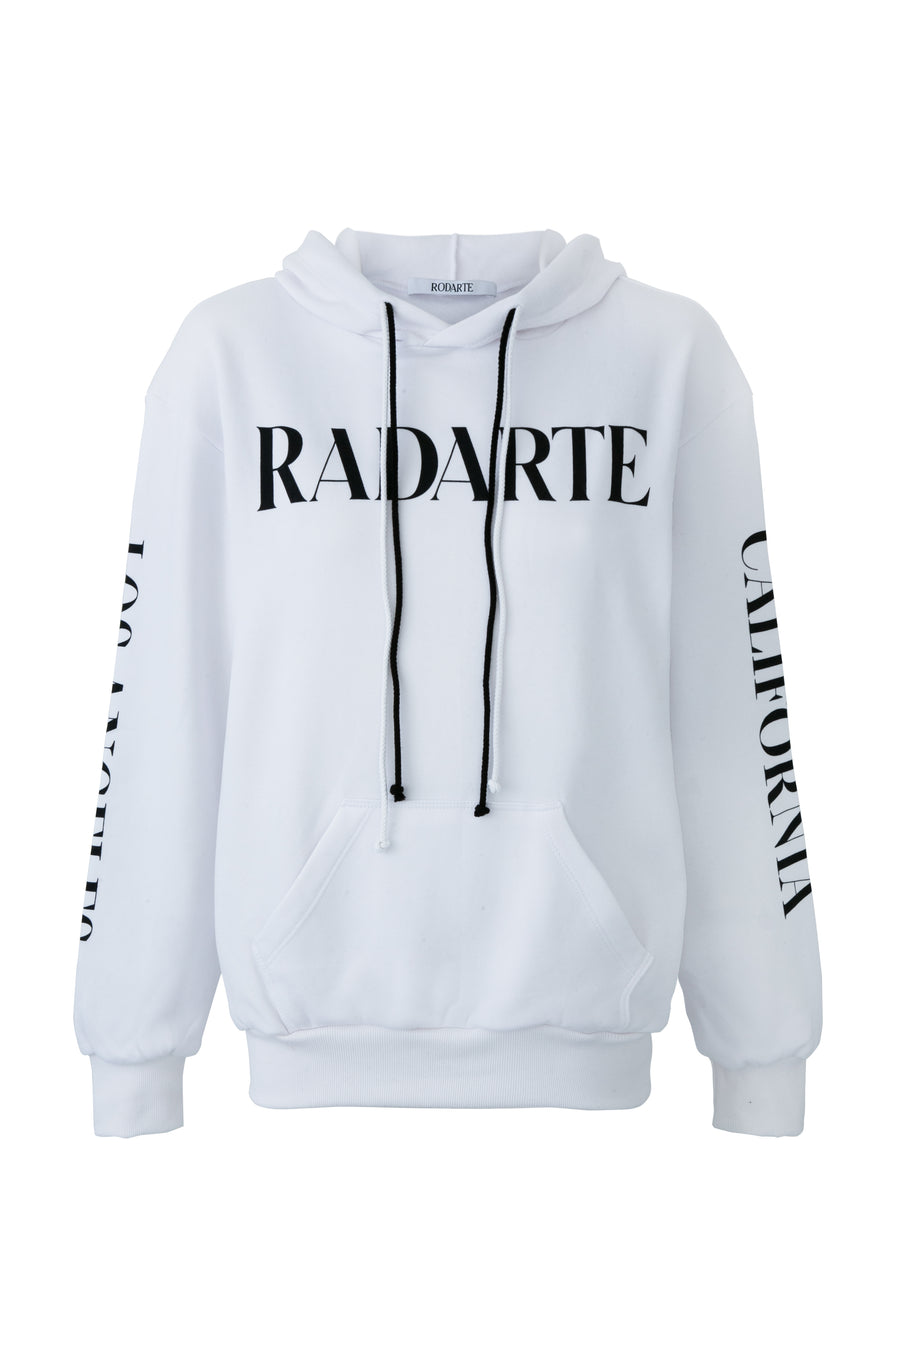 Radarte Large Logo Hoodie